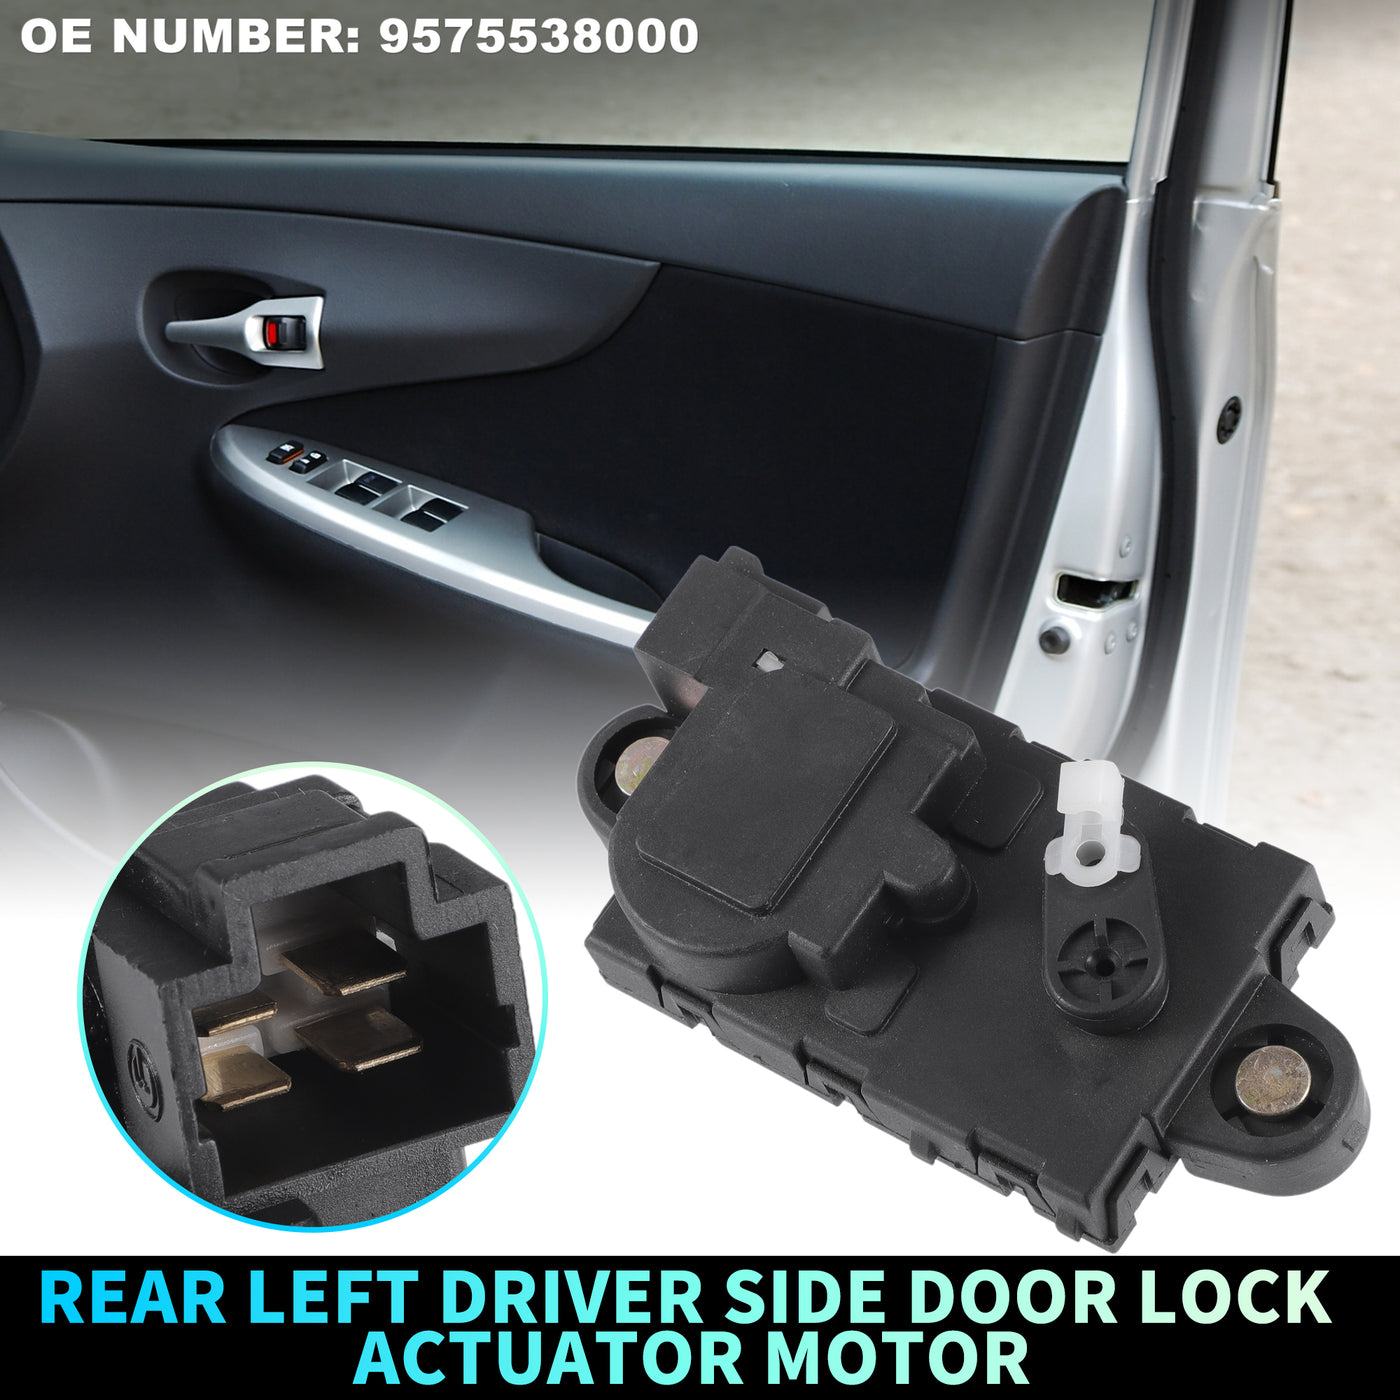 X AUTOHAUX Replacement Rear Left Driver Side Power Door Lock Actuator Motor for Hyundai Sonata 1999-2005 for Hyundai XG350 2002-2005 Door Latch Actuator Assembly Replace No.9575538000 Black